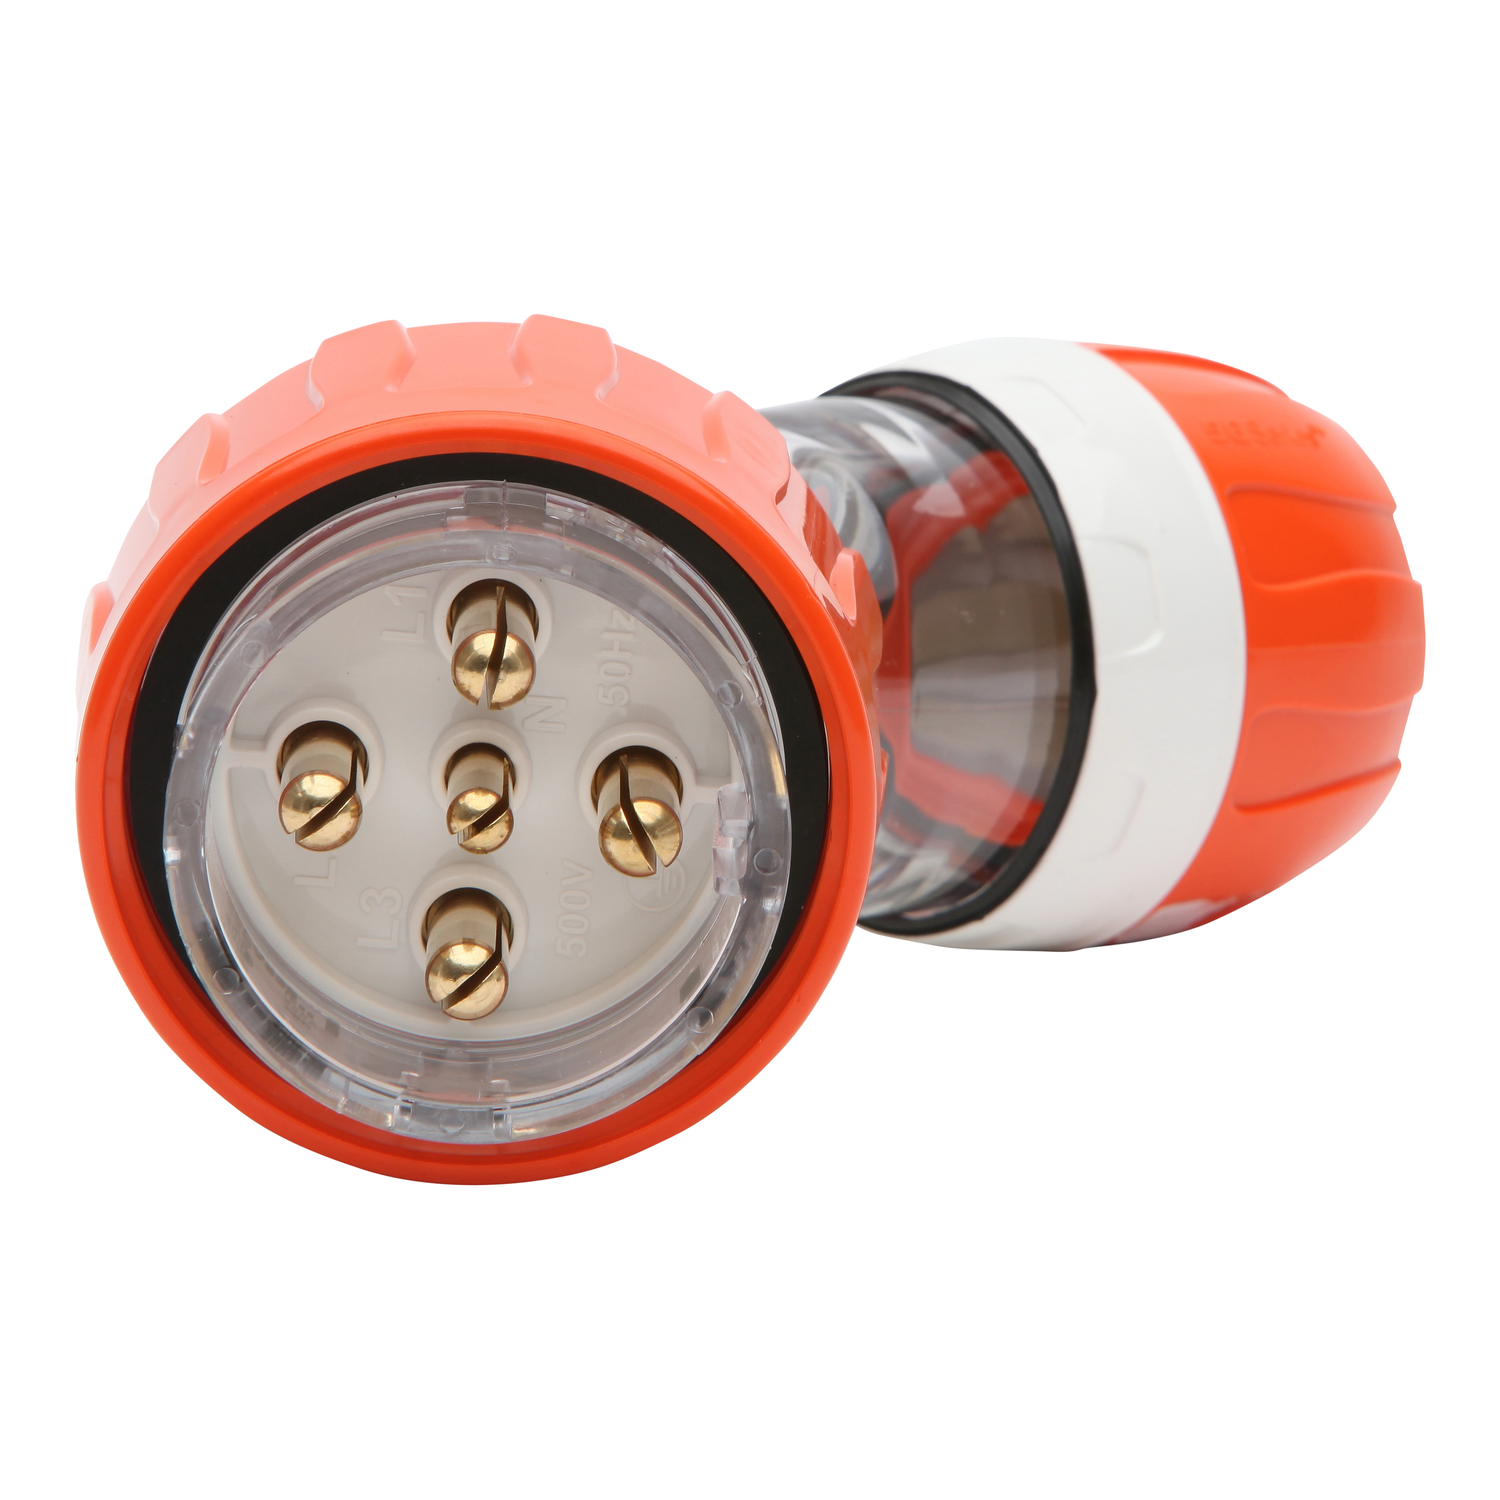 PDL 56 Series - Plug Angled 32A 500V 3-Phase 5-Round Pin IP66 - Orange